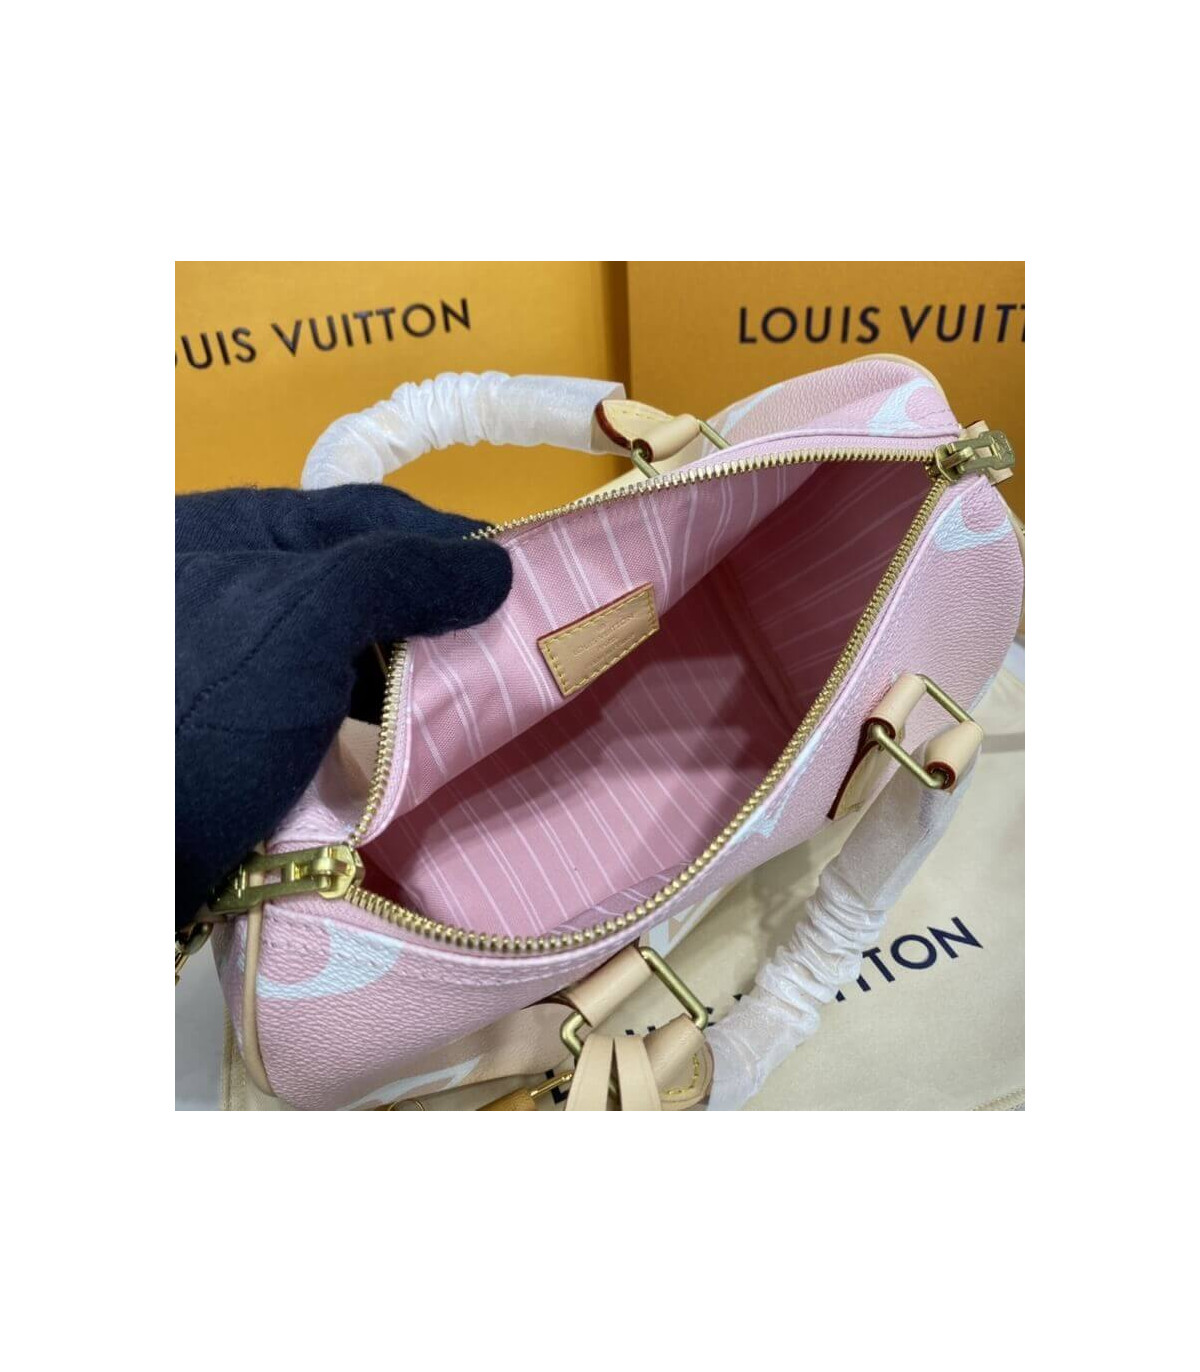 Shop Louis Vuitton Speedy Bandoulière 20 (M46594, M46222, M46234, M46594,  M46222, M46234) by lifeisfun